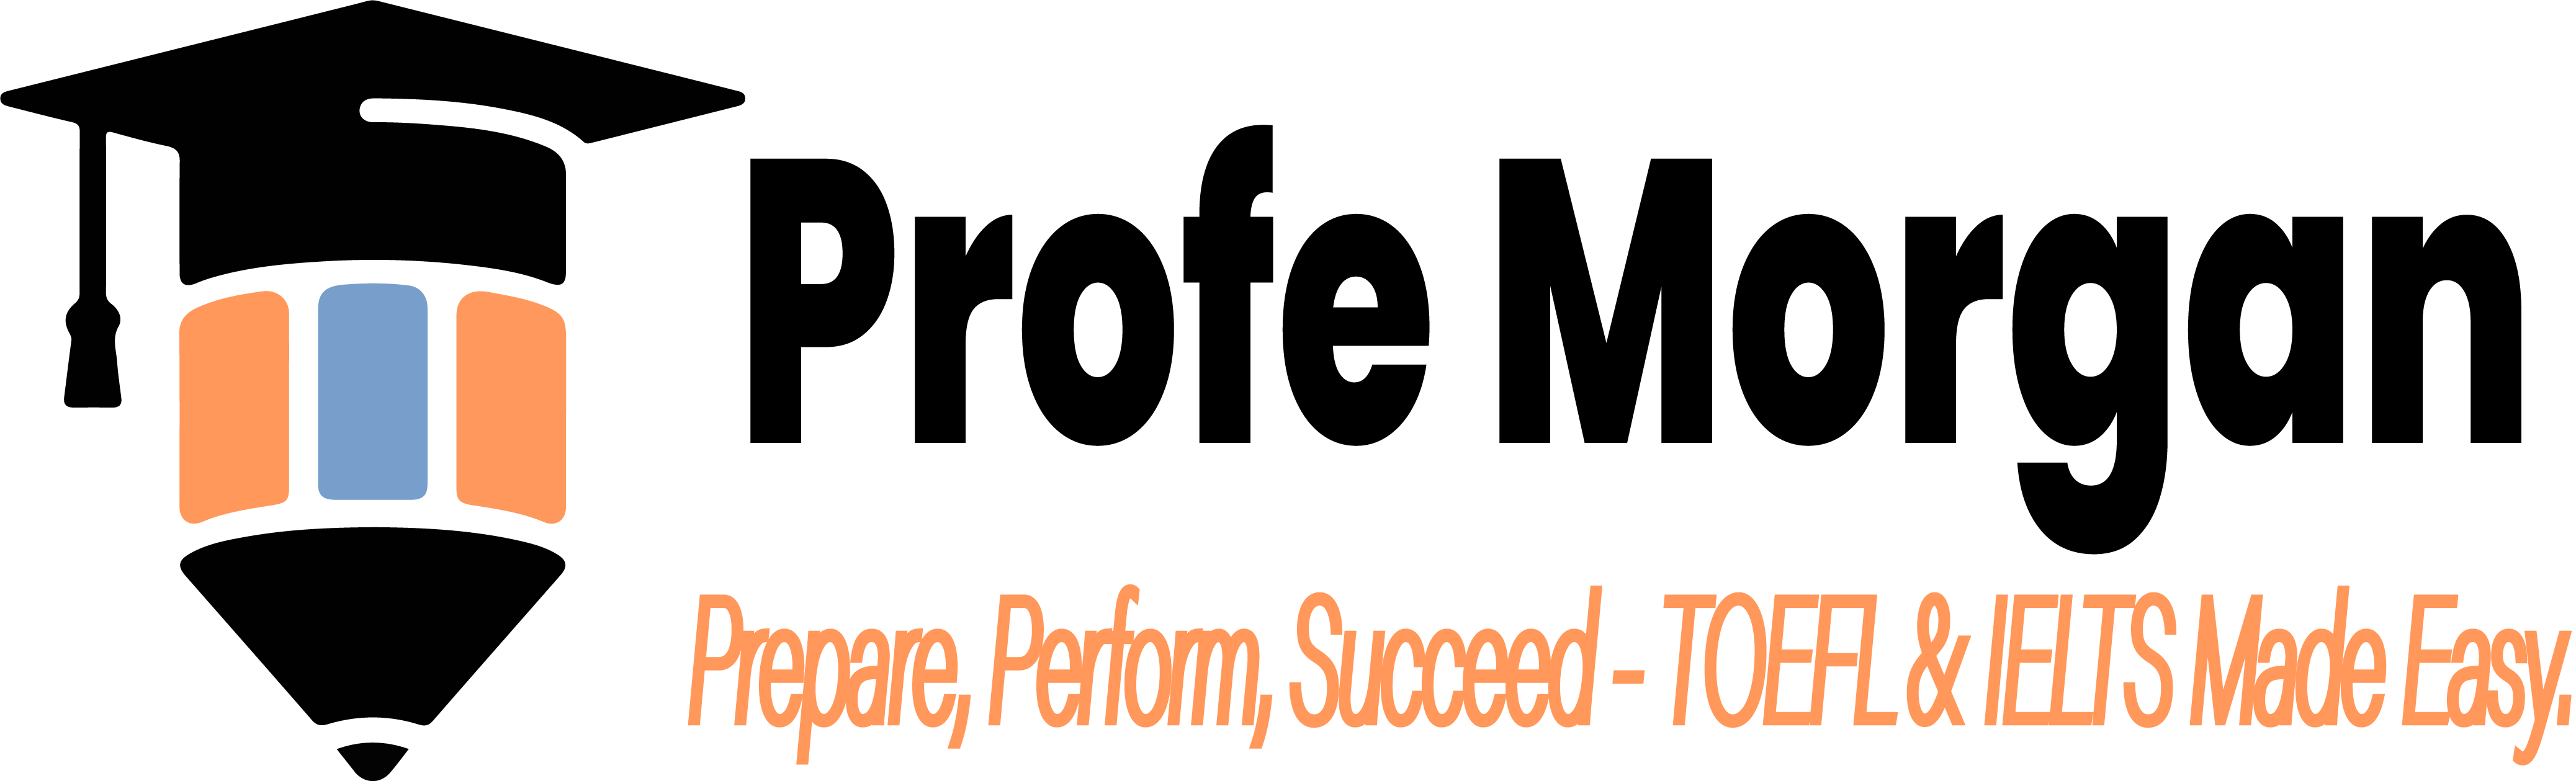 Profe Morgan - Prepare, perform, succeed - TOEFL & IELTS Made easy